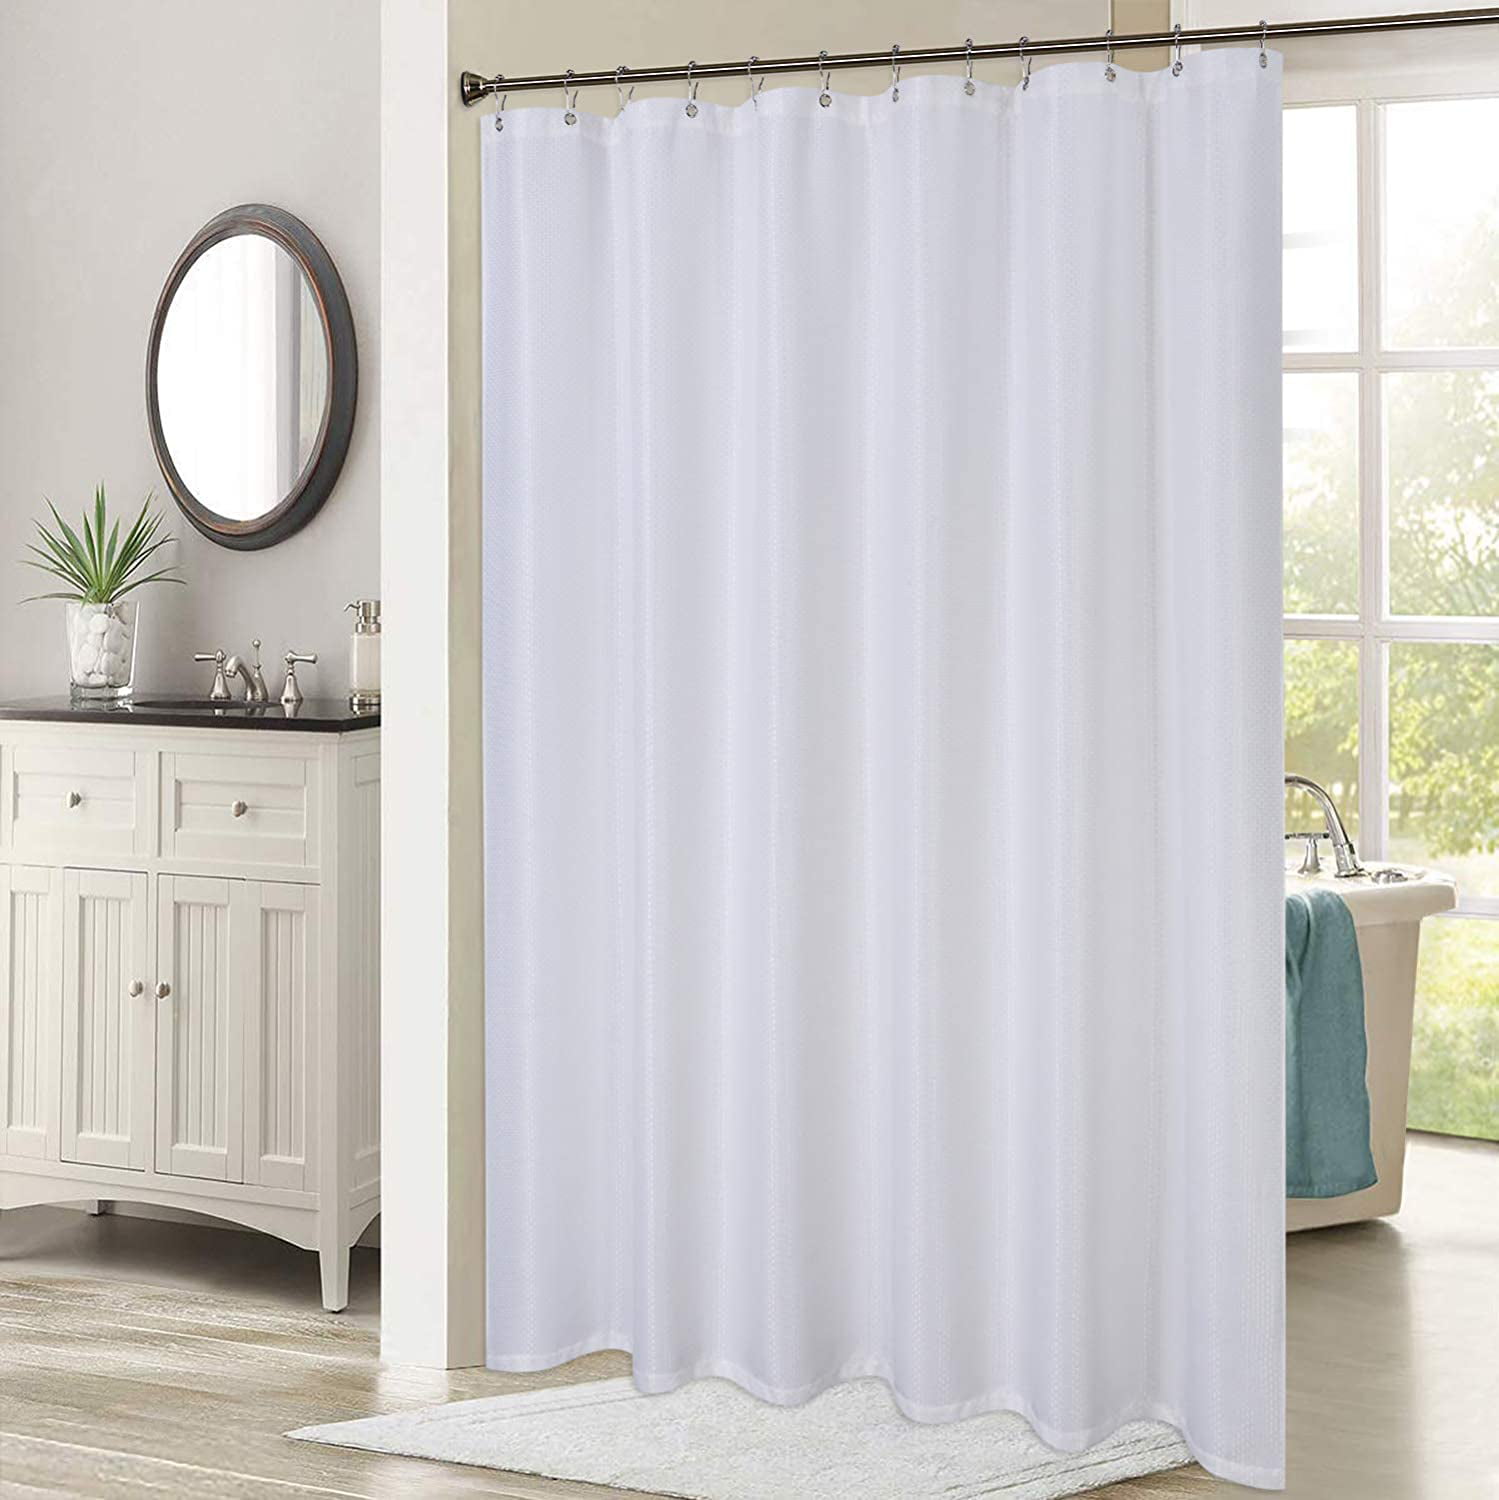 Vintage Wooden Barn Door Bathroom Fabric Shower Curtain Extra Long 84 Inch 